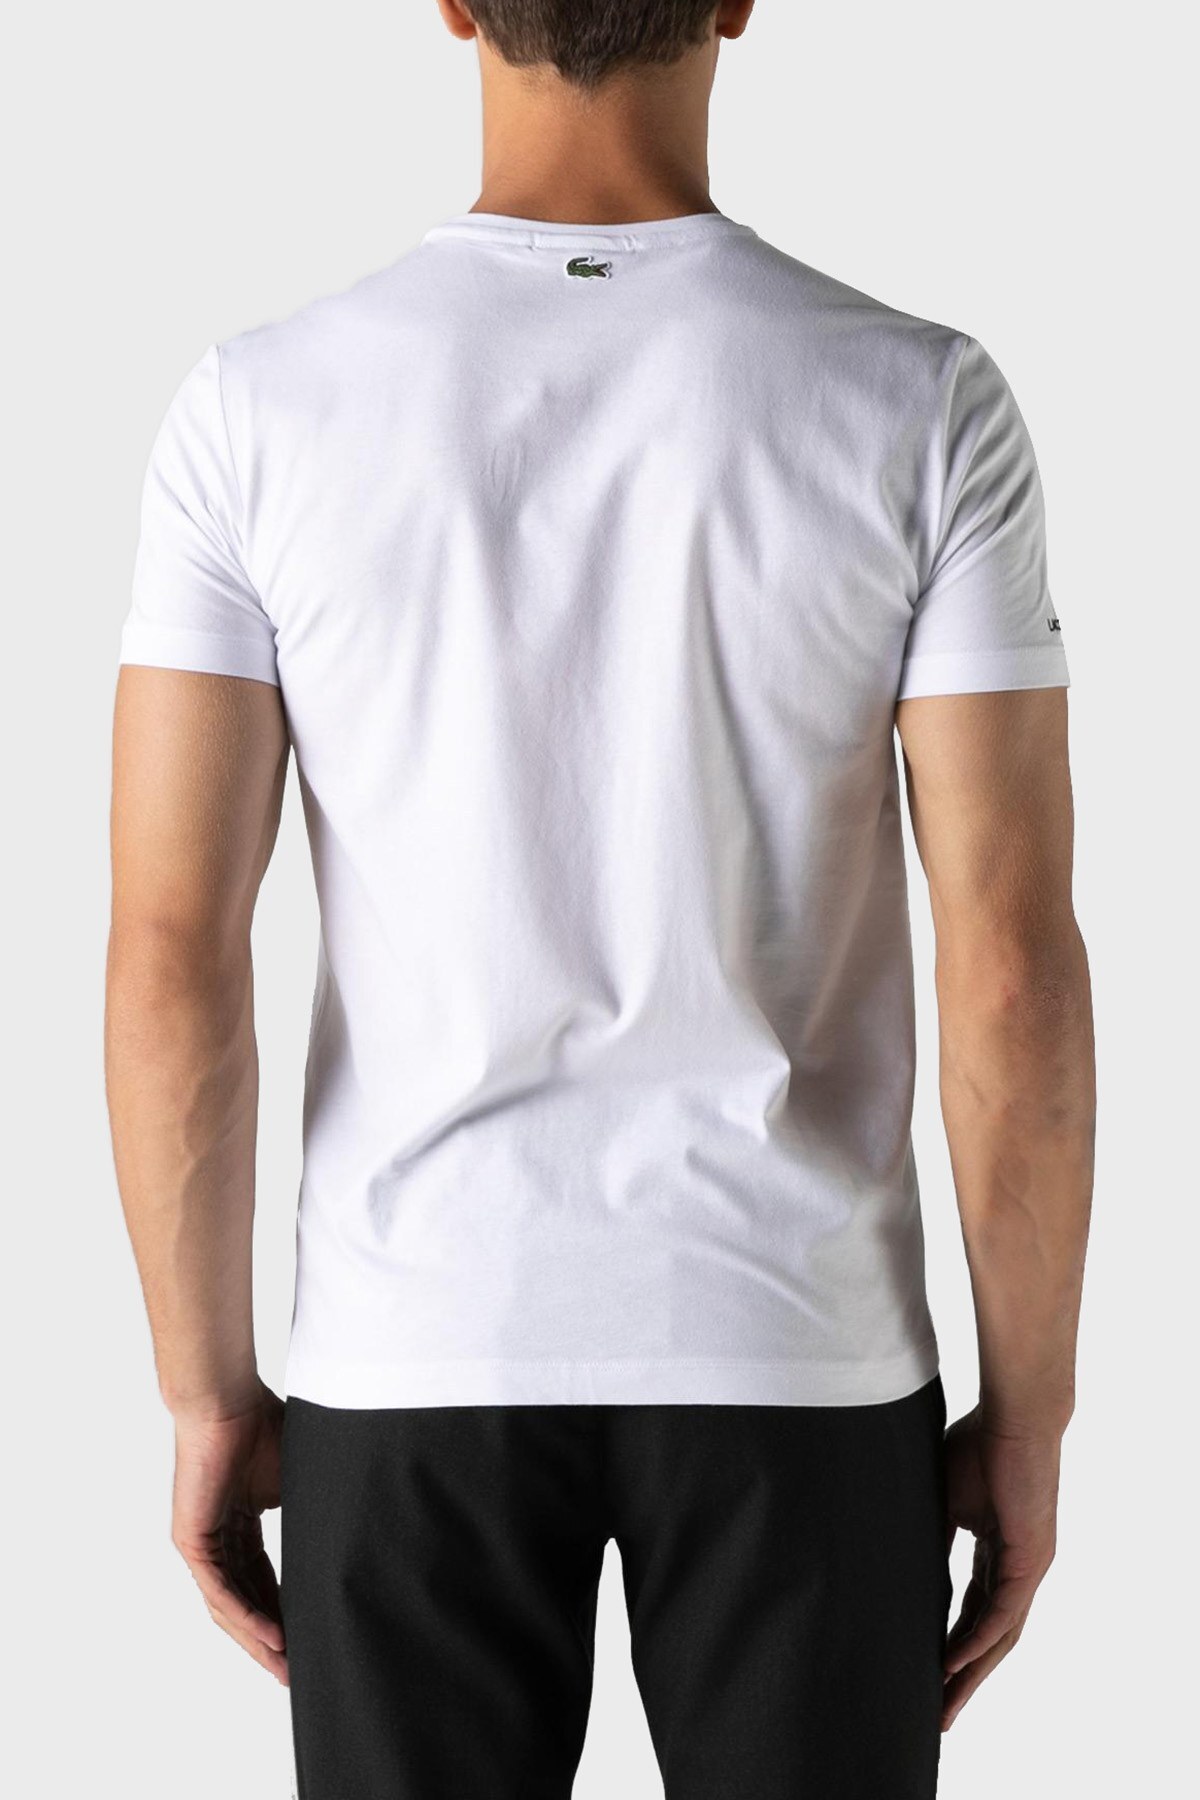 Lacoste Logo Baskılı % 100 Pamuk Slim Fit Erkek T Shirt TH2207 07B BEYAZ